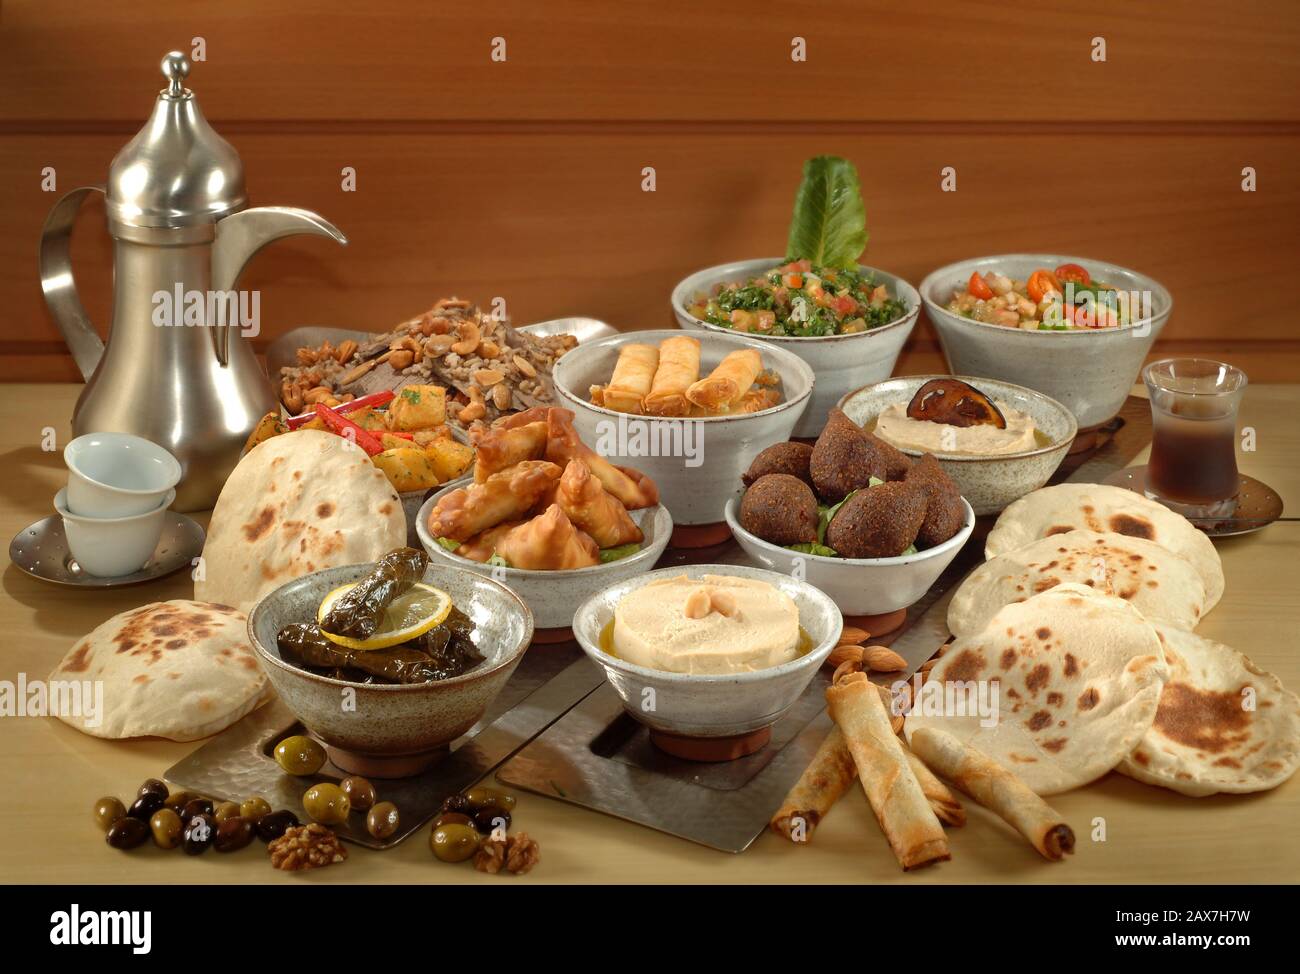 Arabian, Lebanese food. Stock Photo